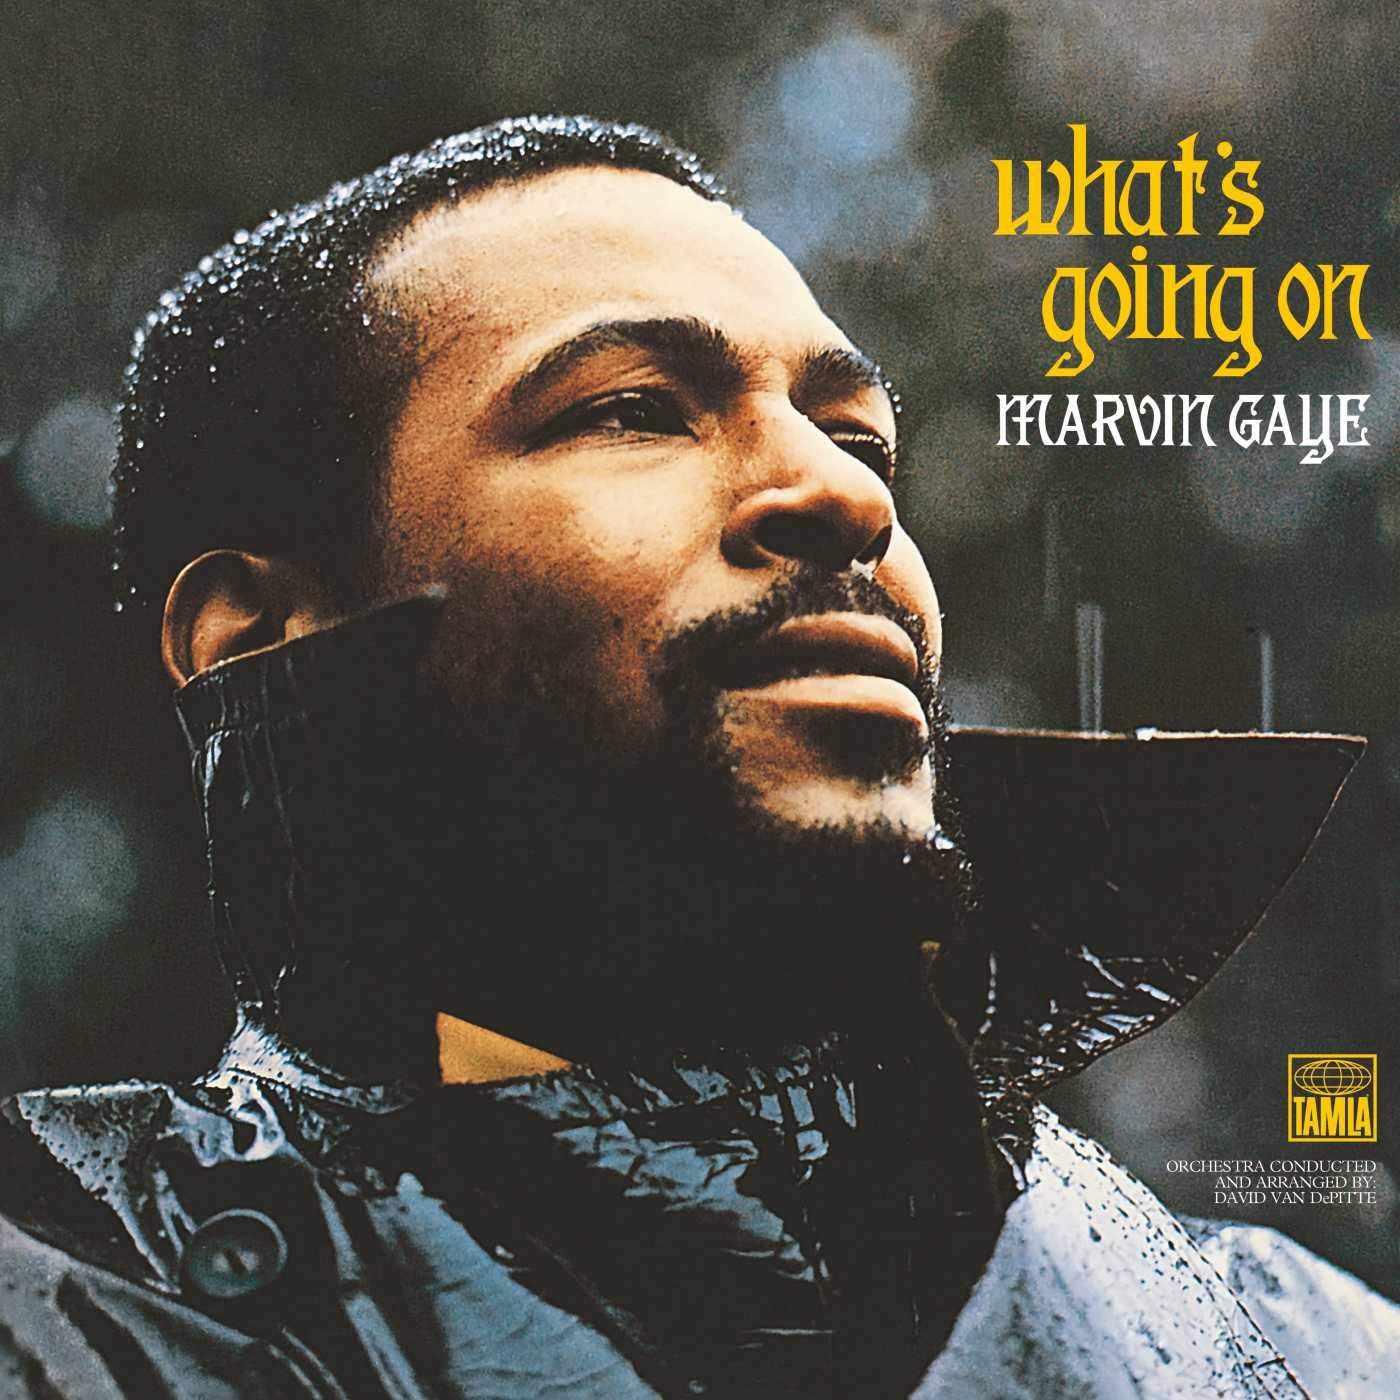 MARVIN GAYE - What's Going On - LP - 180g Vinyl